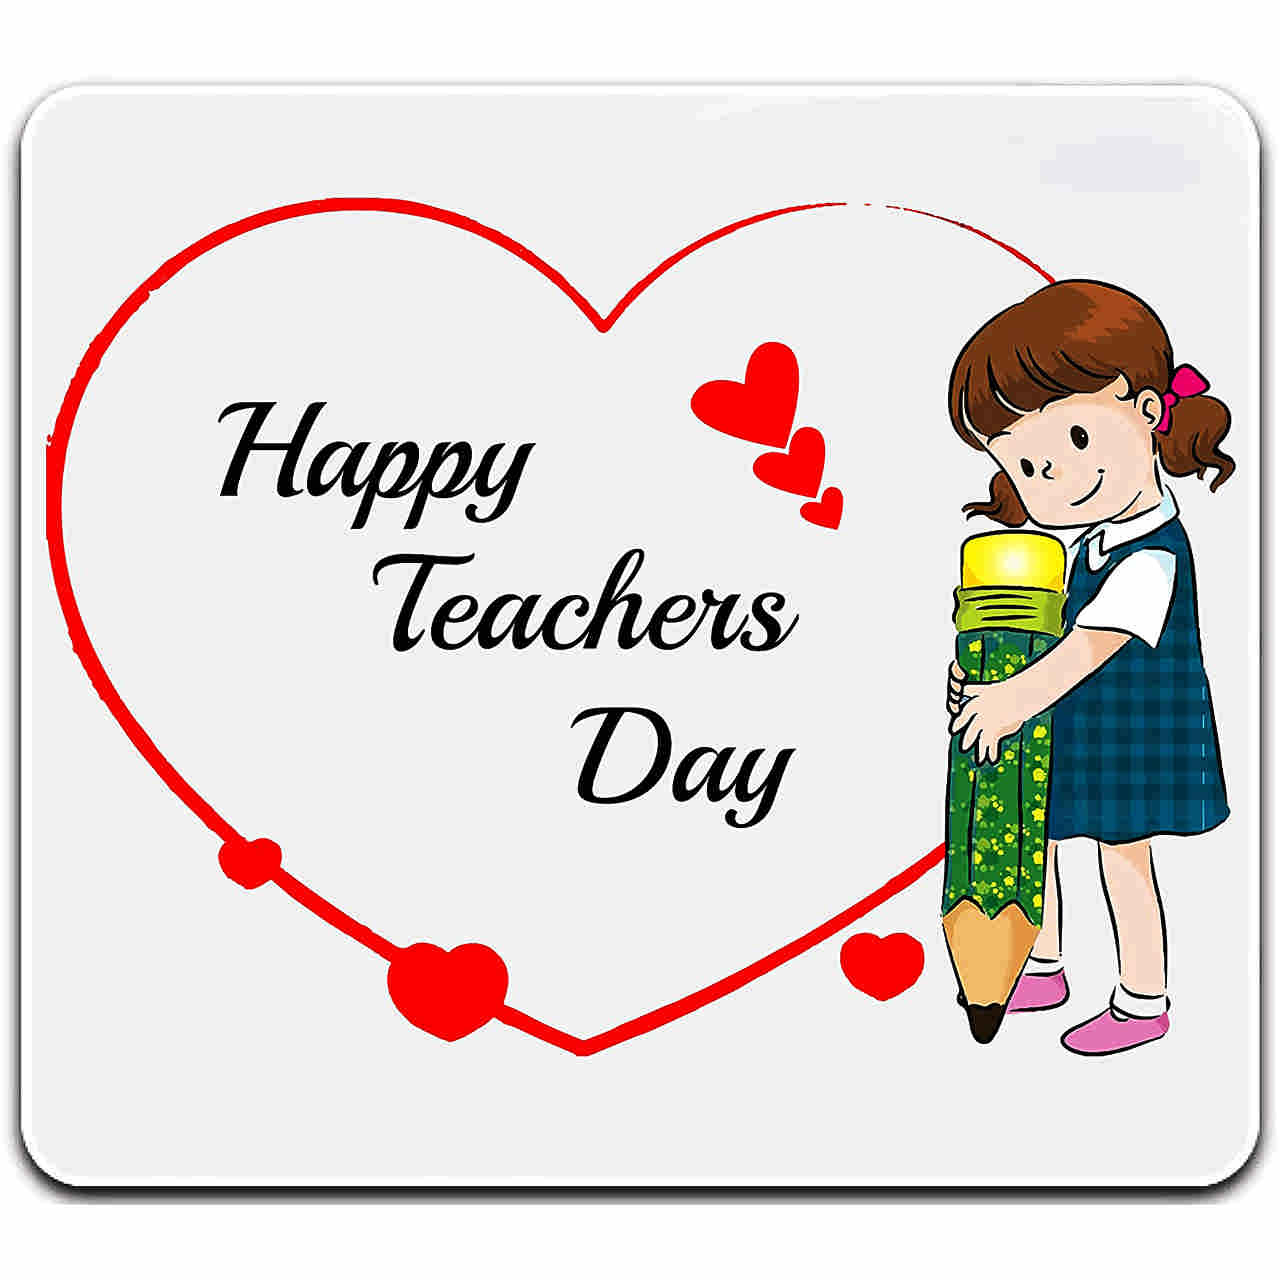 HAPPY TEACHERS DAY MOUSE PAD (Design 4)